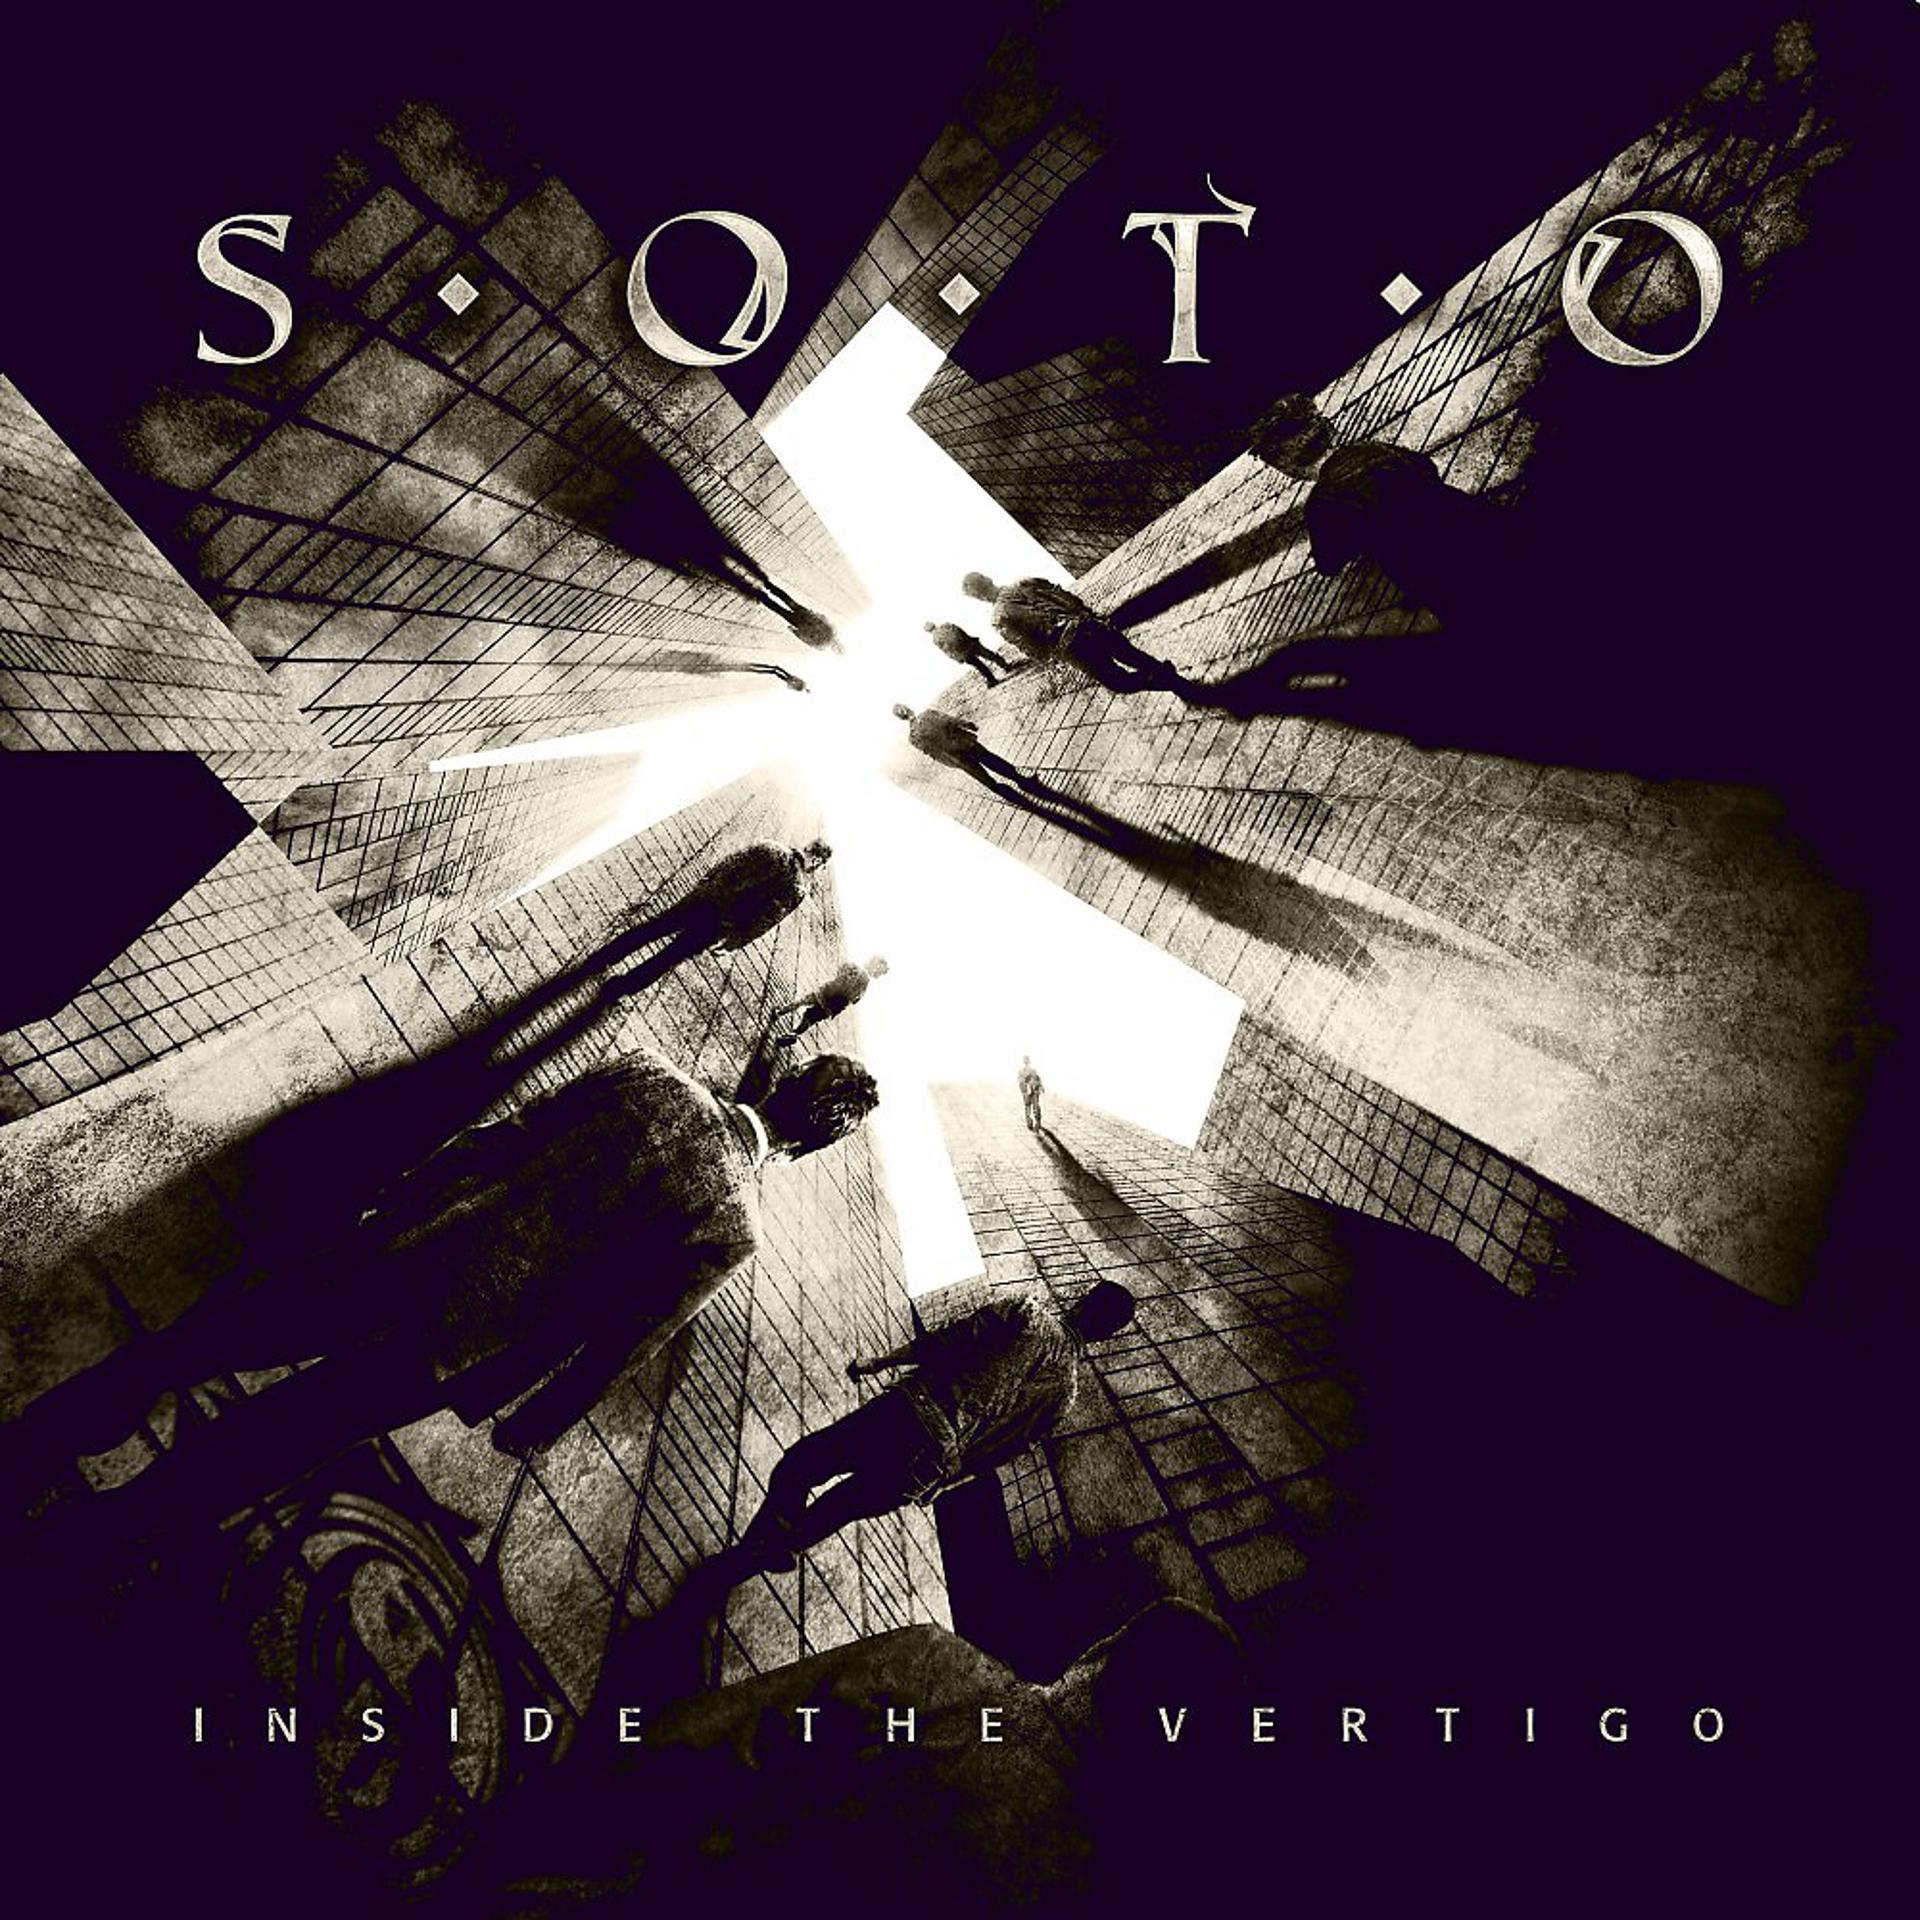 S o s live. Jeff Scott Soto « inside the Vertigo » 2015. S.O.T.O - 2015 - inside the Vertigo. Jeff Scott Soto обложки. Jeff Scott Soto - Prism (2002).